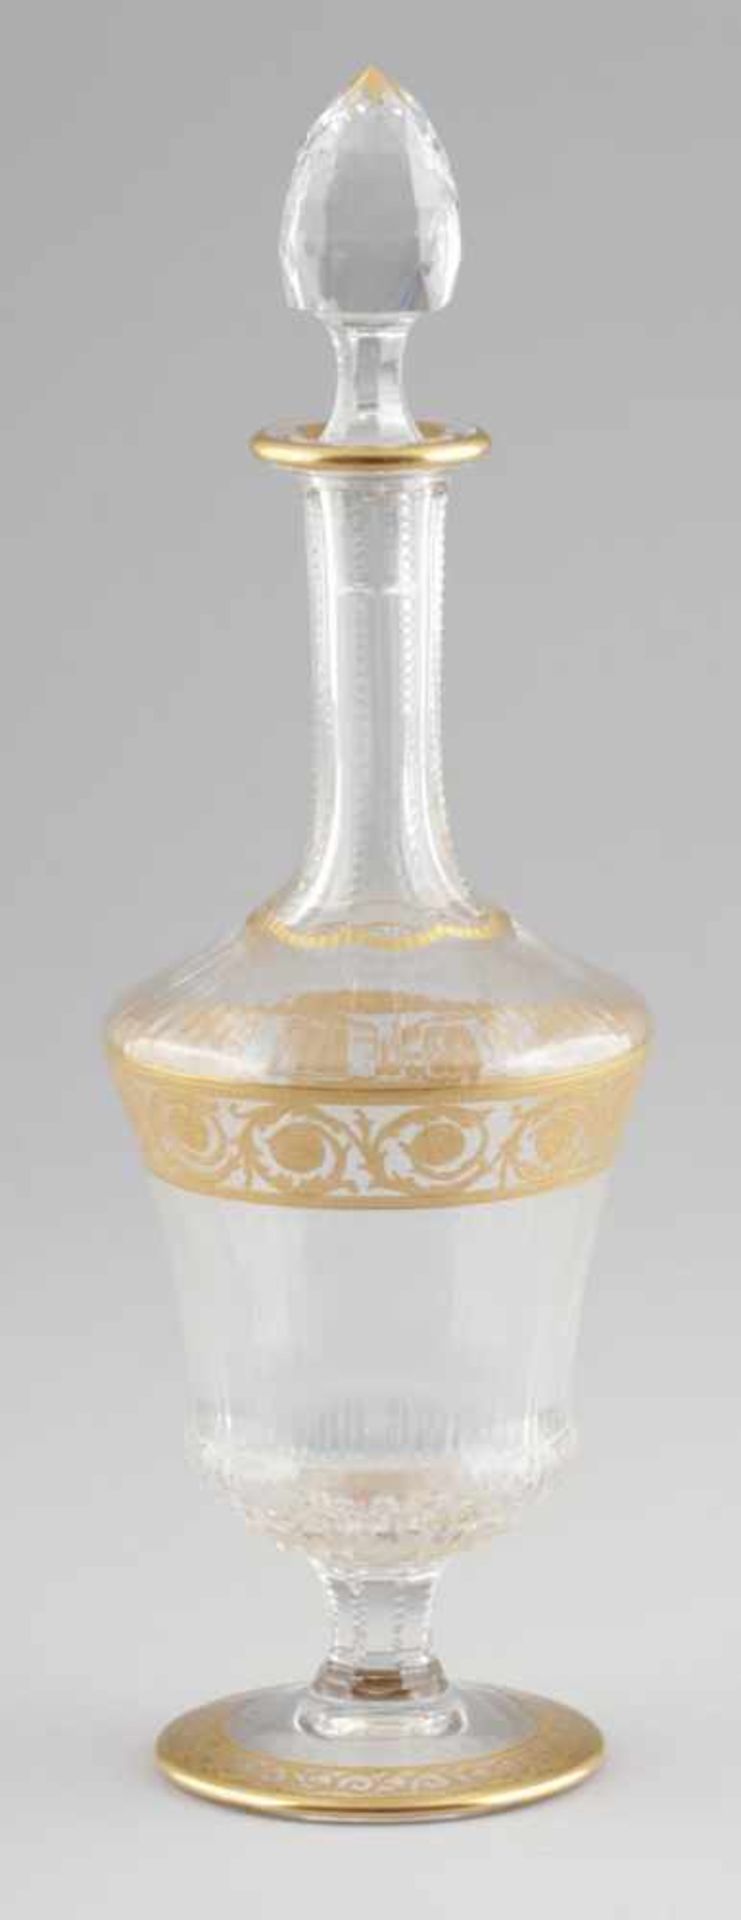 Karaffe mit Stöpsel - Thistle Verreries & Cristalleries de Saint Louis. Farbloses Kristallglas,